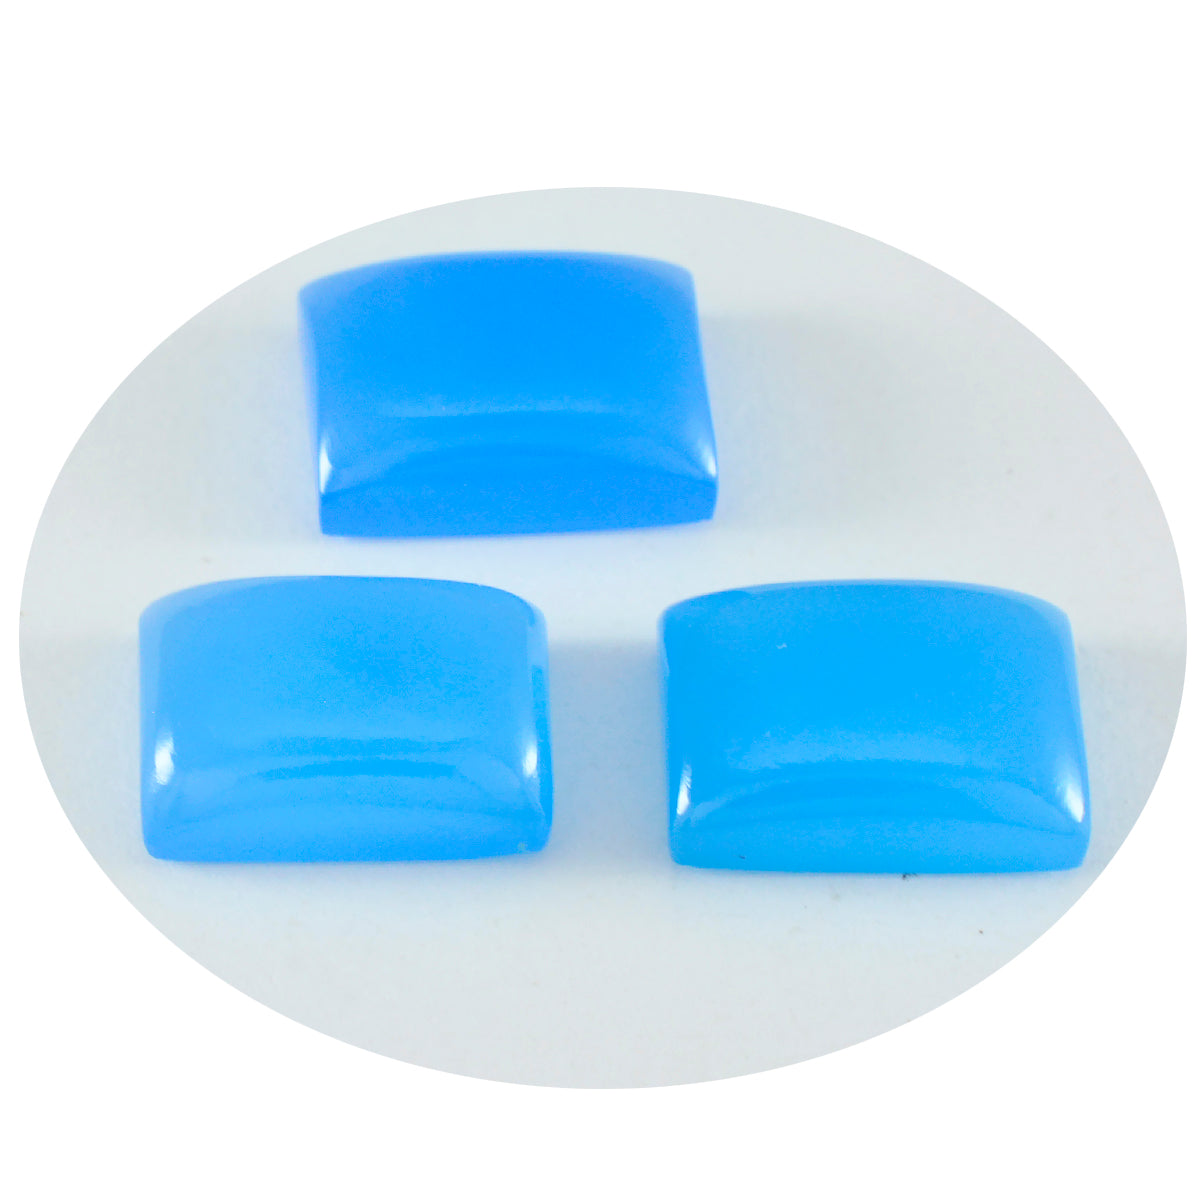 riyogems 1 st blå kalcedon cabochon 10x14 mm oktagonform snygg kvalitetssten